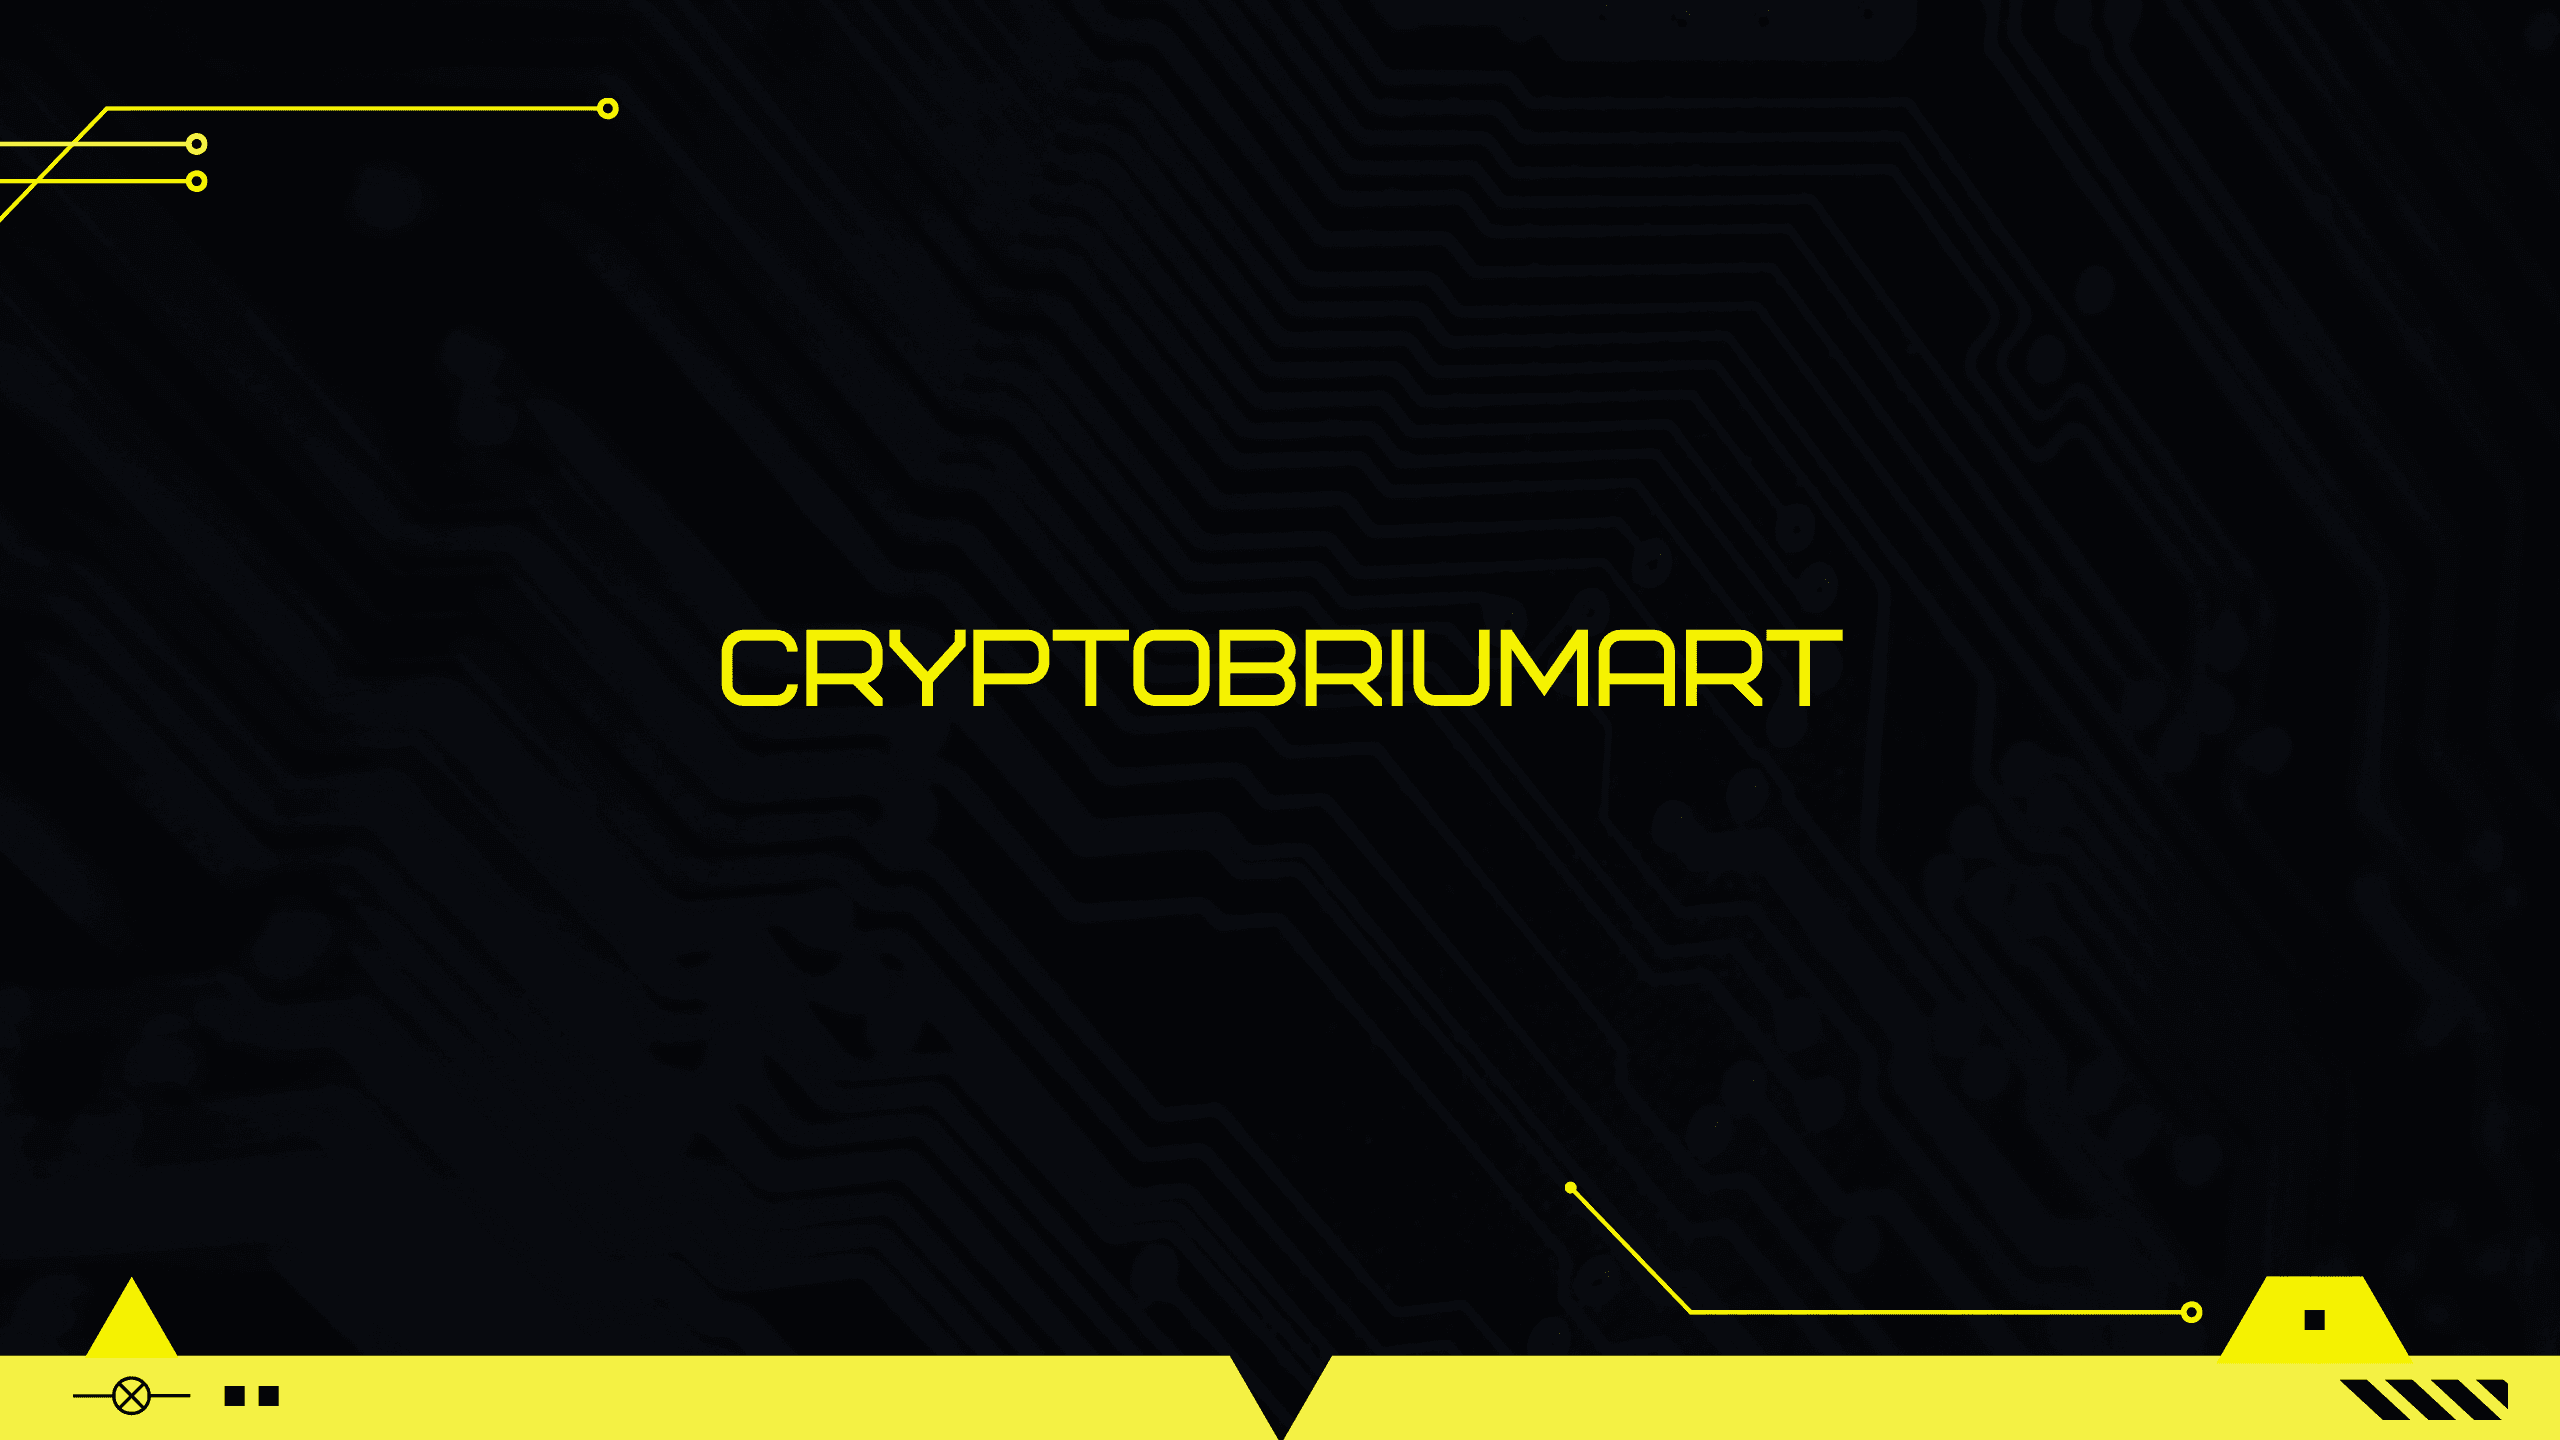 CryptobriumArt 横幅